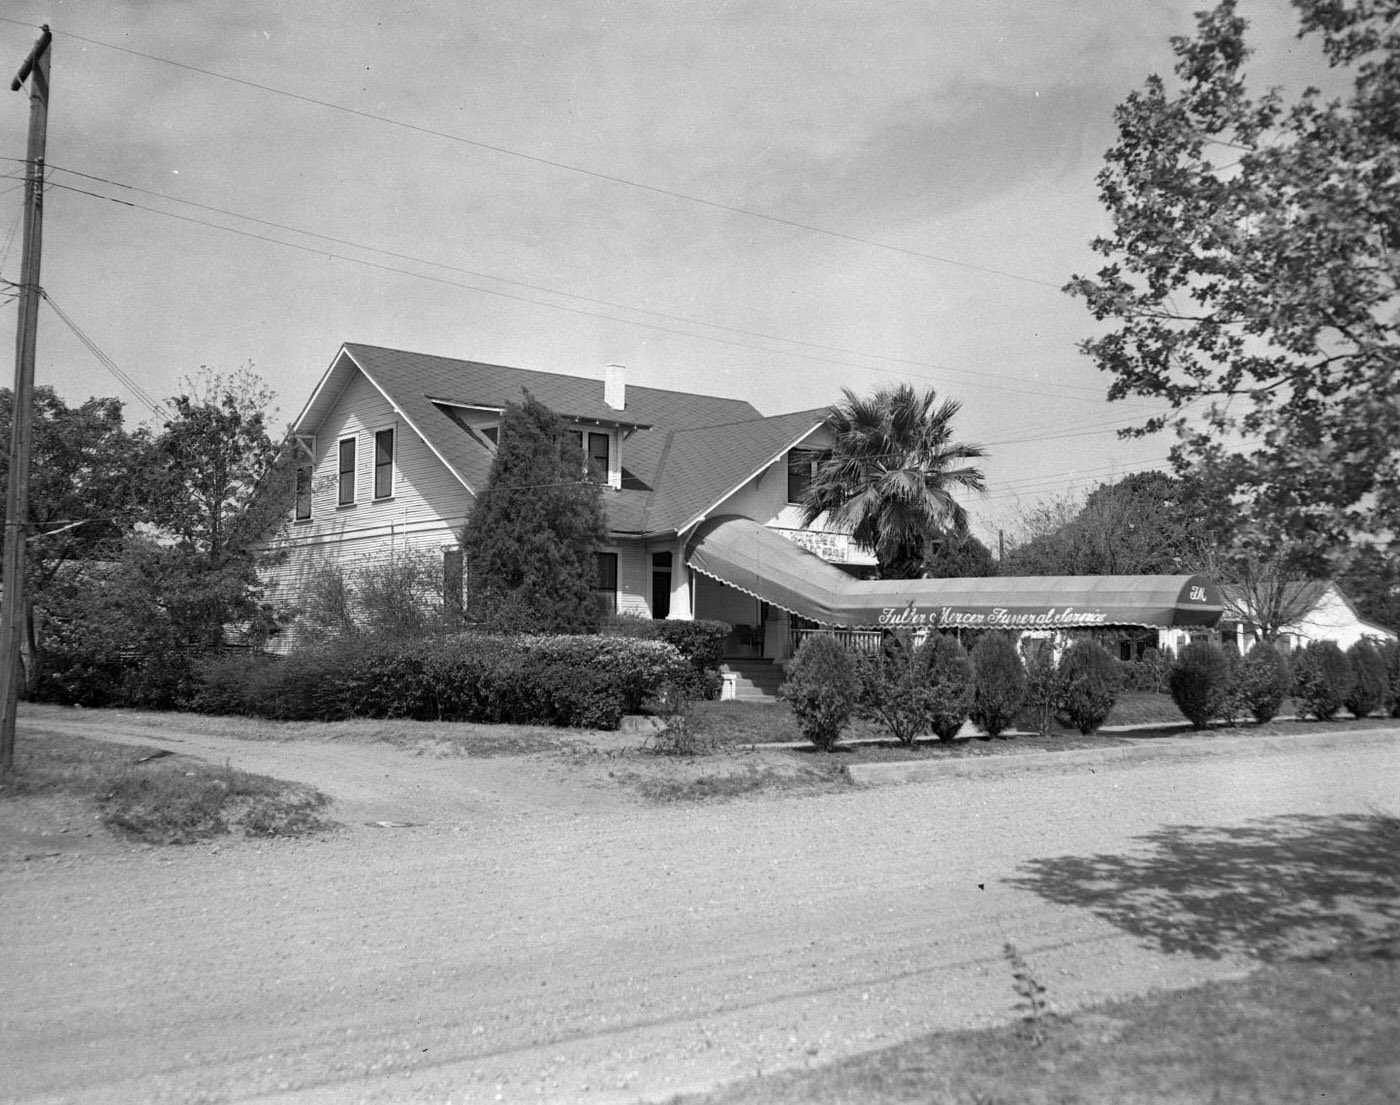 Fuller Mercer Funeral Service Building, 1950